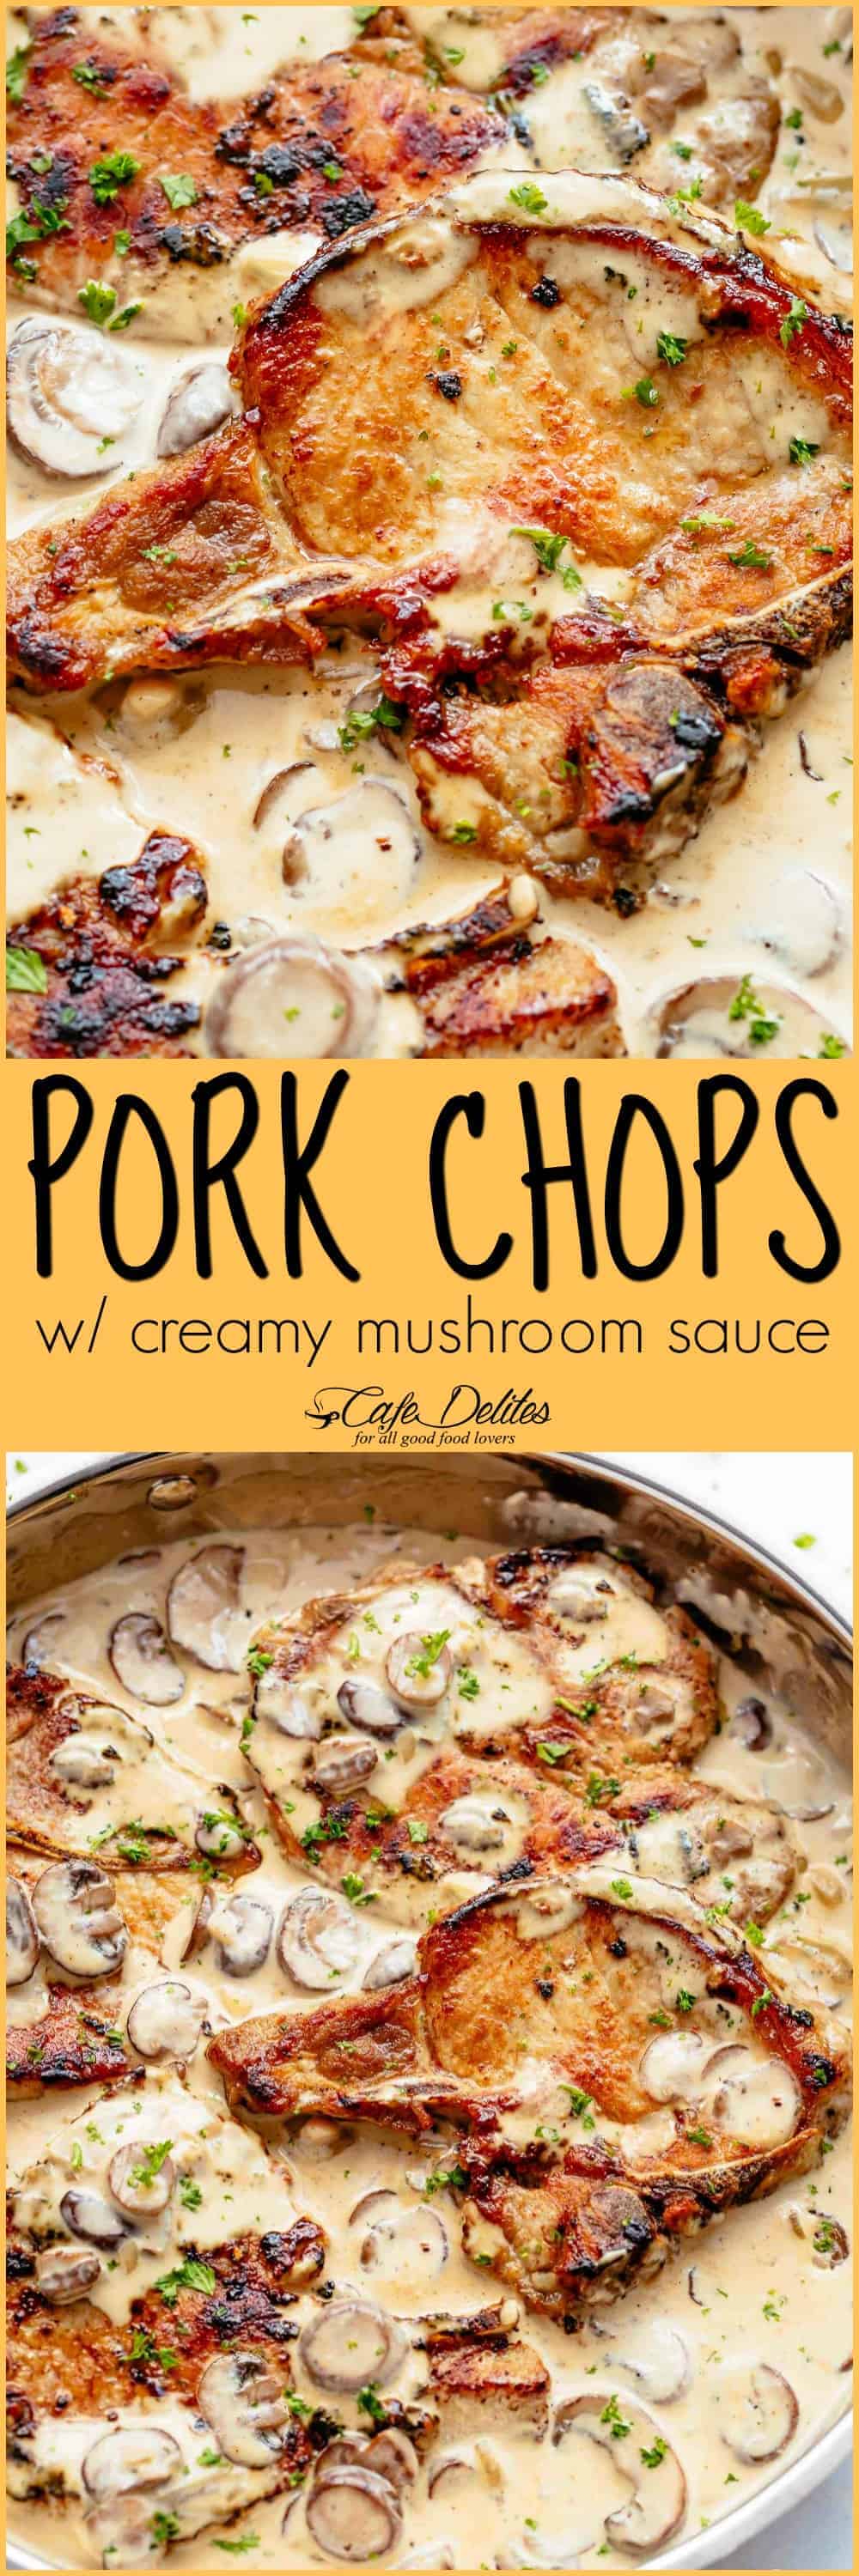 Pork Chops With Creamy Mushroom Sauce - Cafe Delites